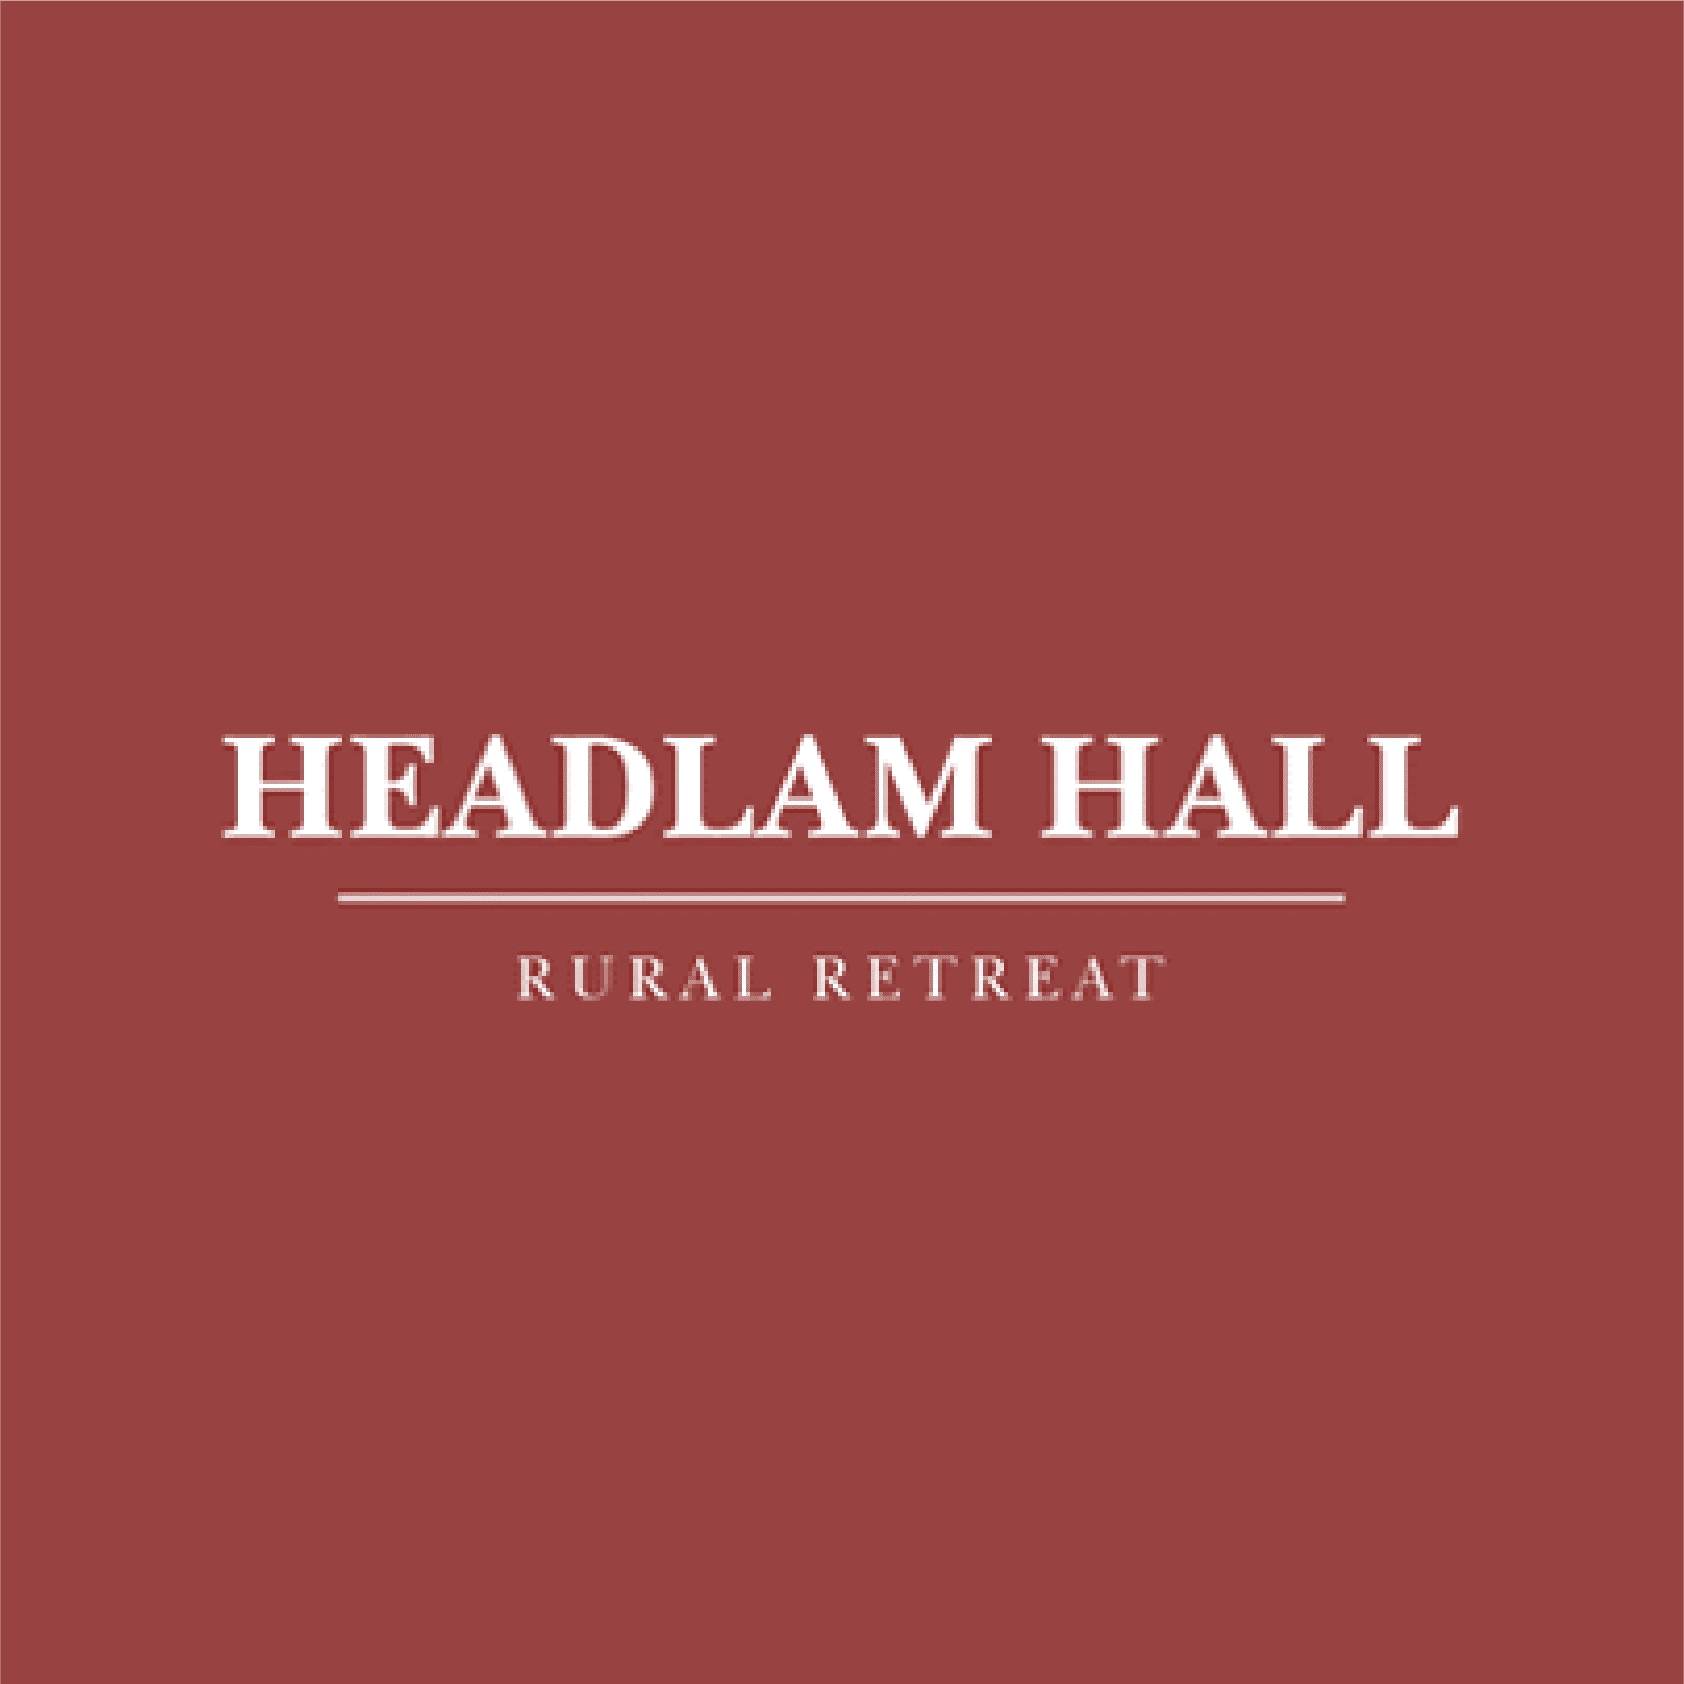 Headlam Hall Rural Retreat